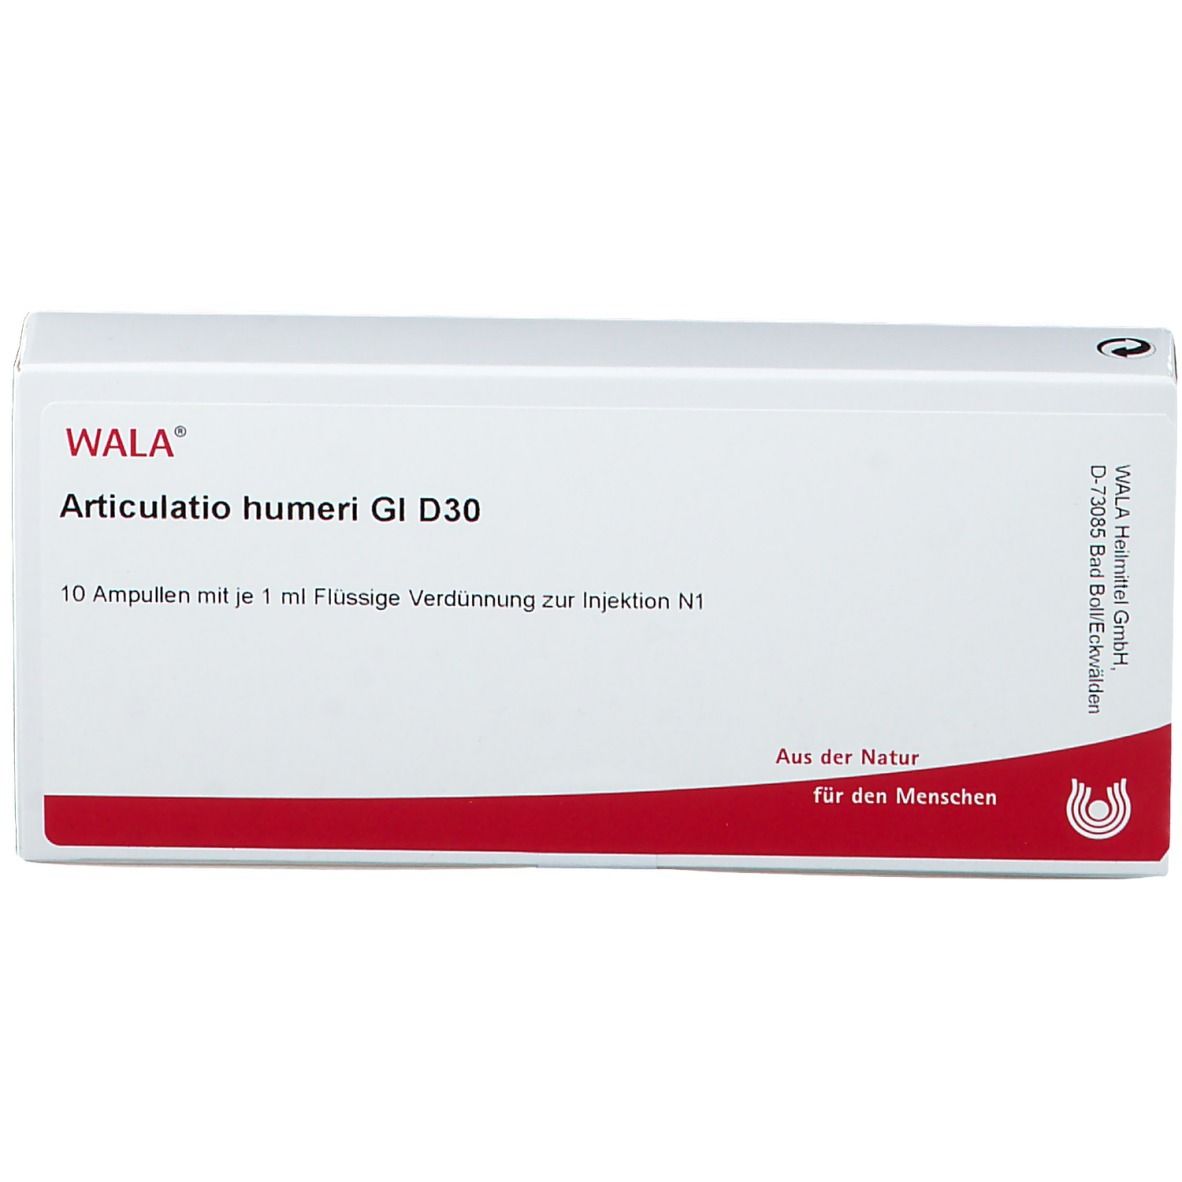 WALA® Articulatio humeri Gl D 30